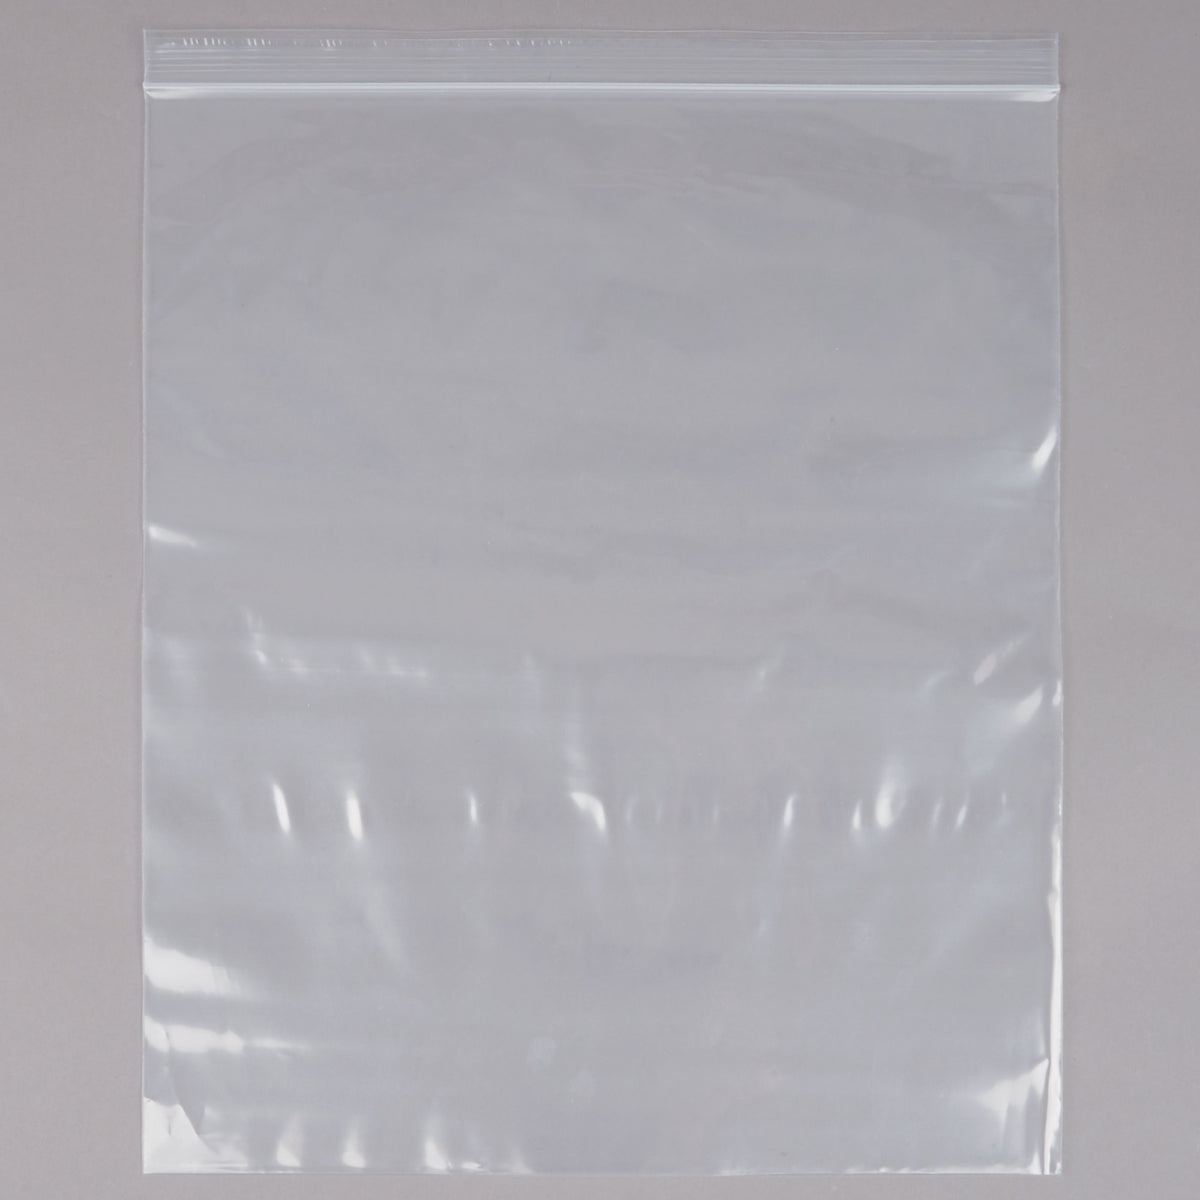 LK Packaging 13 x 15 Heavy Weight 2 Gallon Seal Top Freezer Bag - 100/Pack